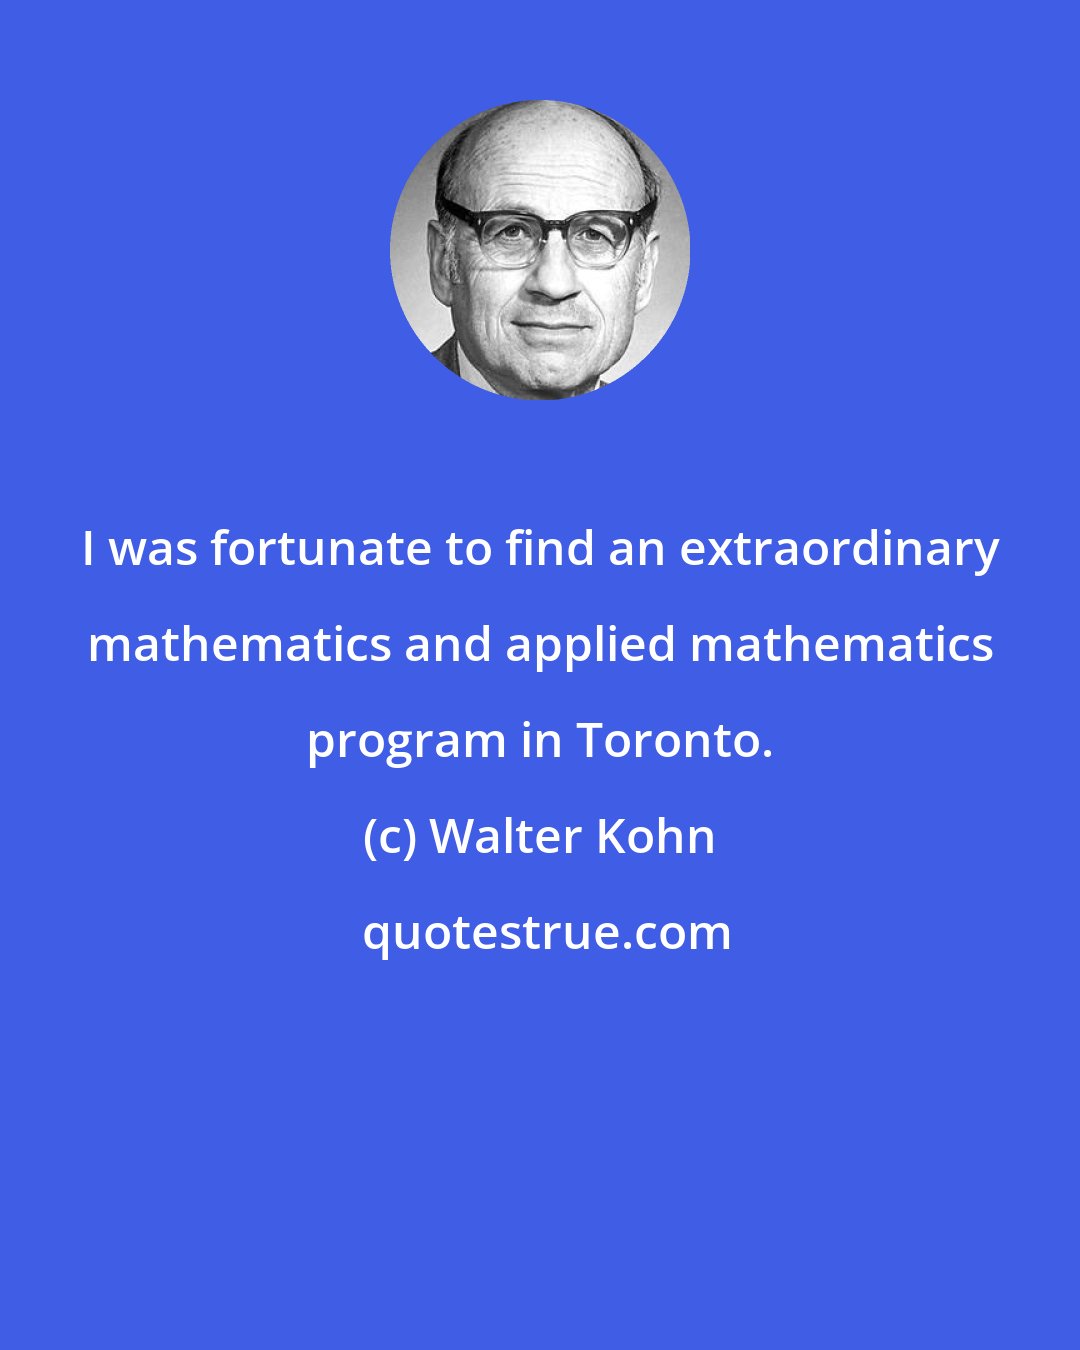 Walter Kohn: I was fortunate to find an extraordinary mathematics and applied mathematics program in Toronto.